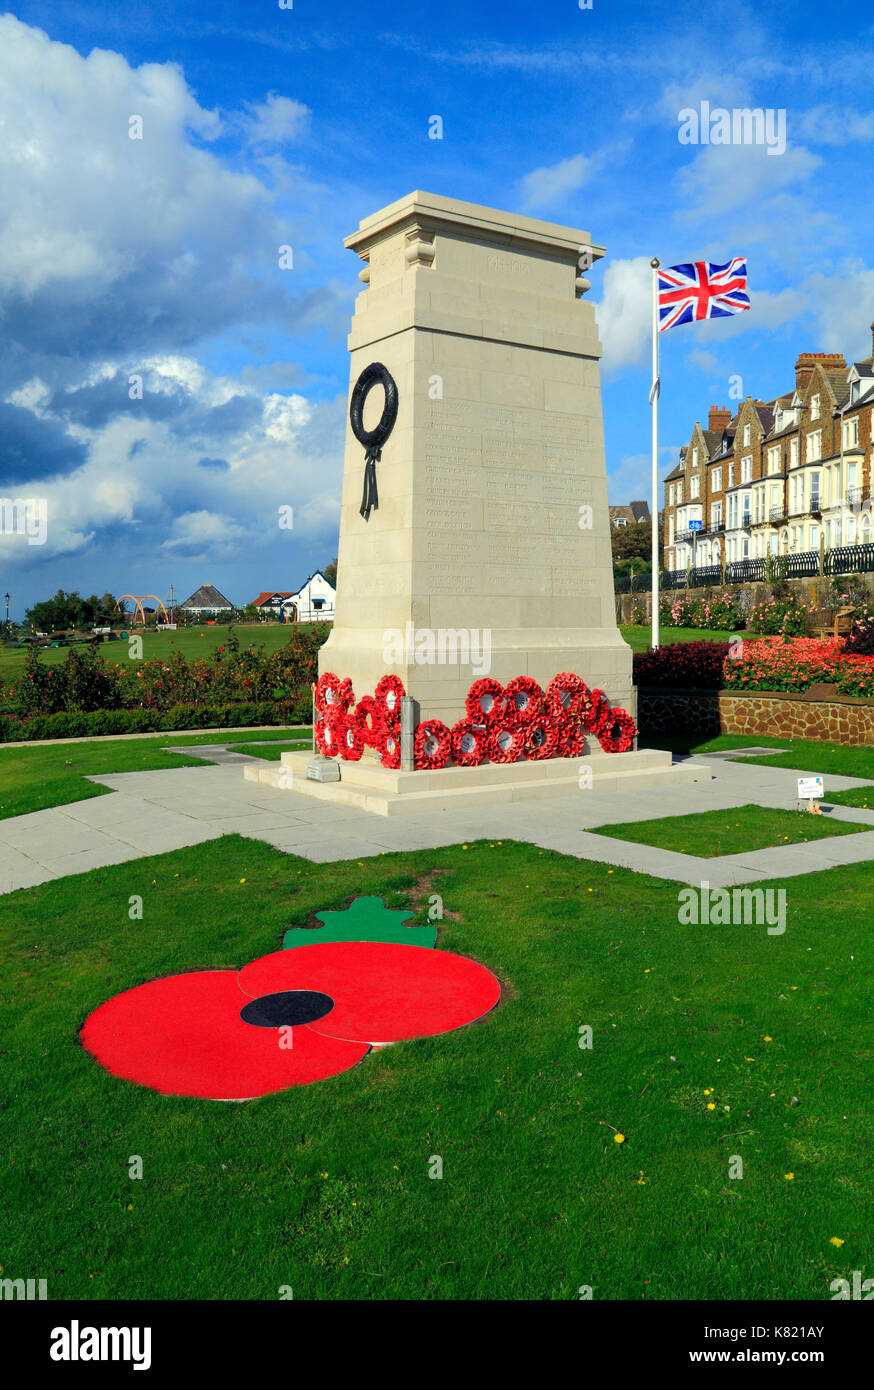 War Memorial, memorials, wreaths, poppies, Union Jack Flag, Esplanade Gardens, Hunstanton, Norfolk, England, UK Stock Photo